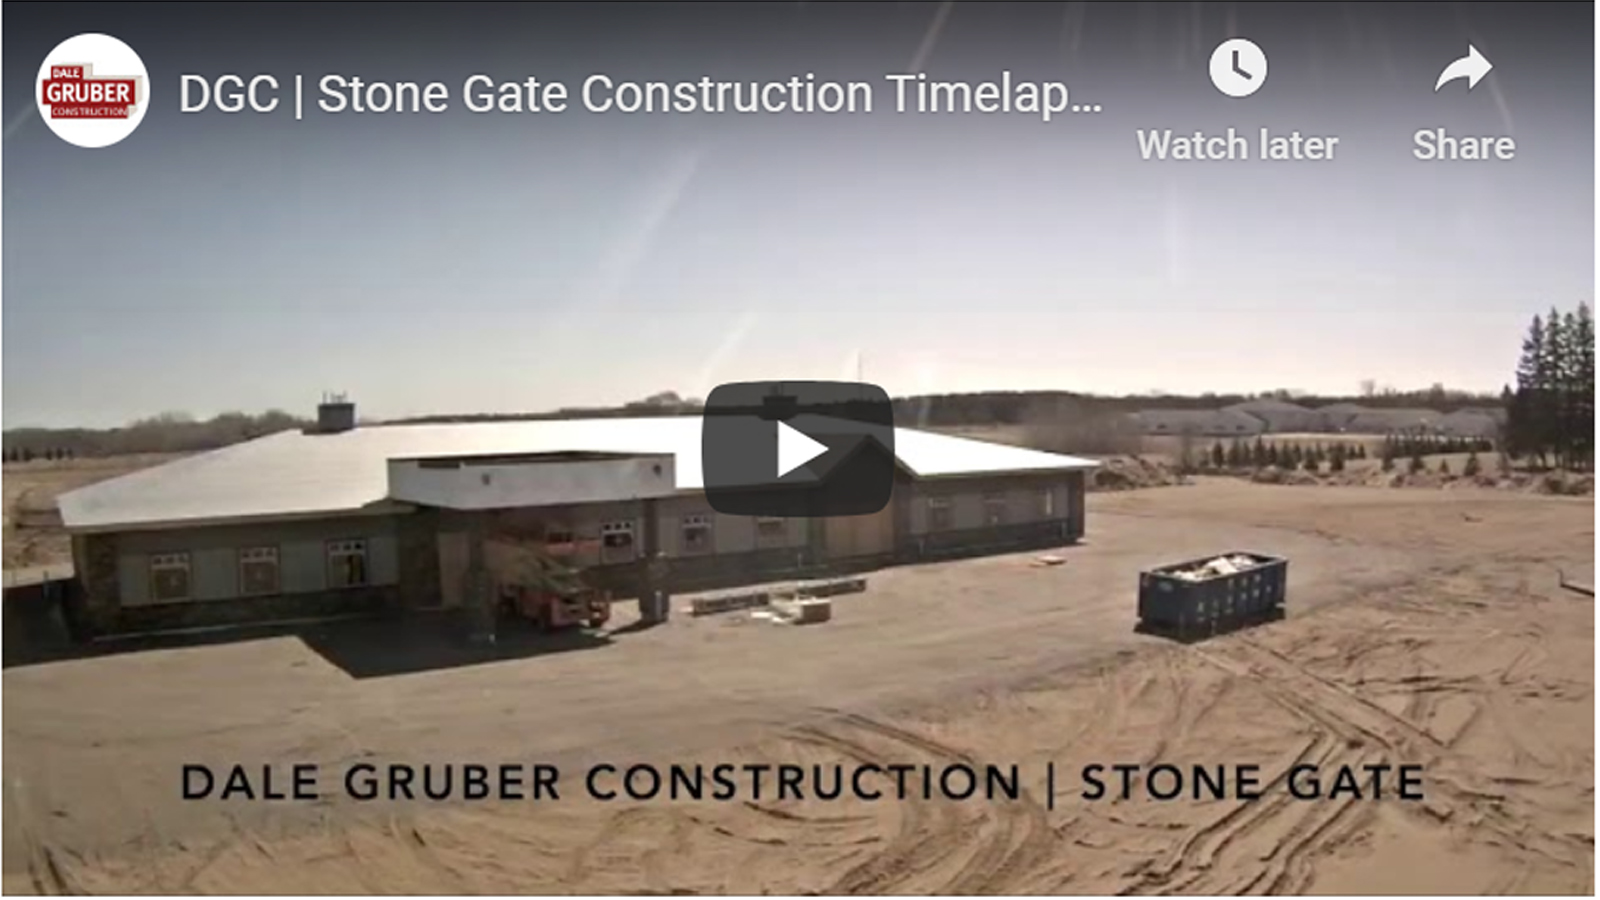 Stone Gate Construction Timelapse Video!